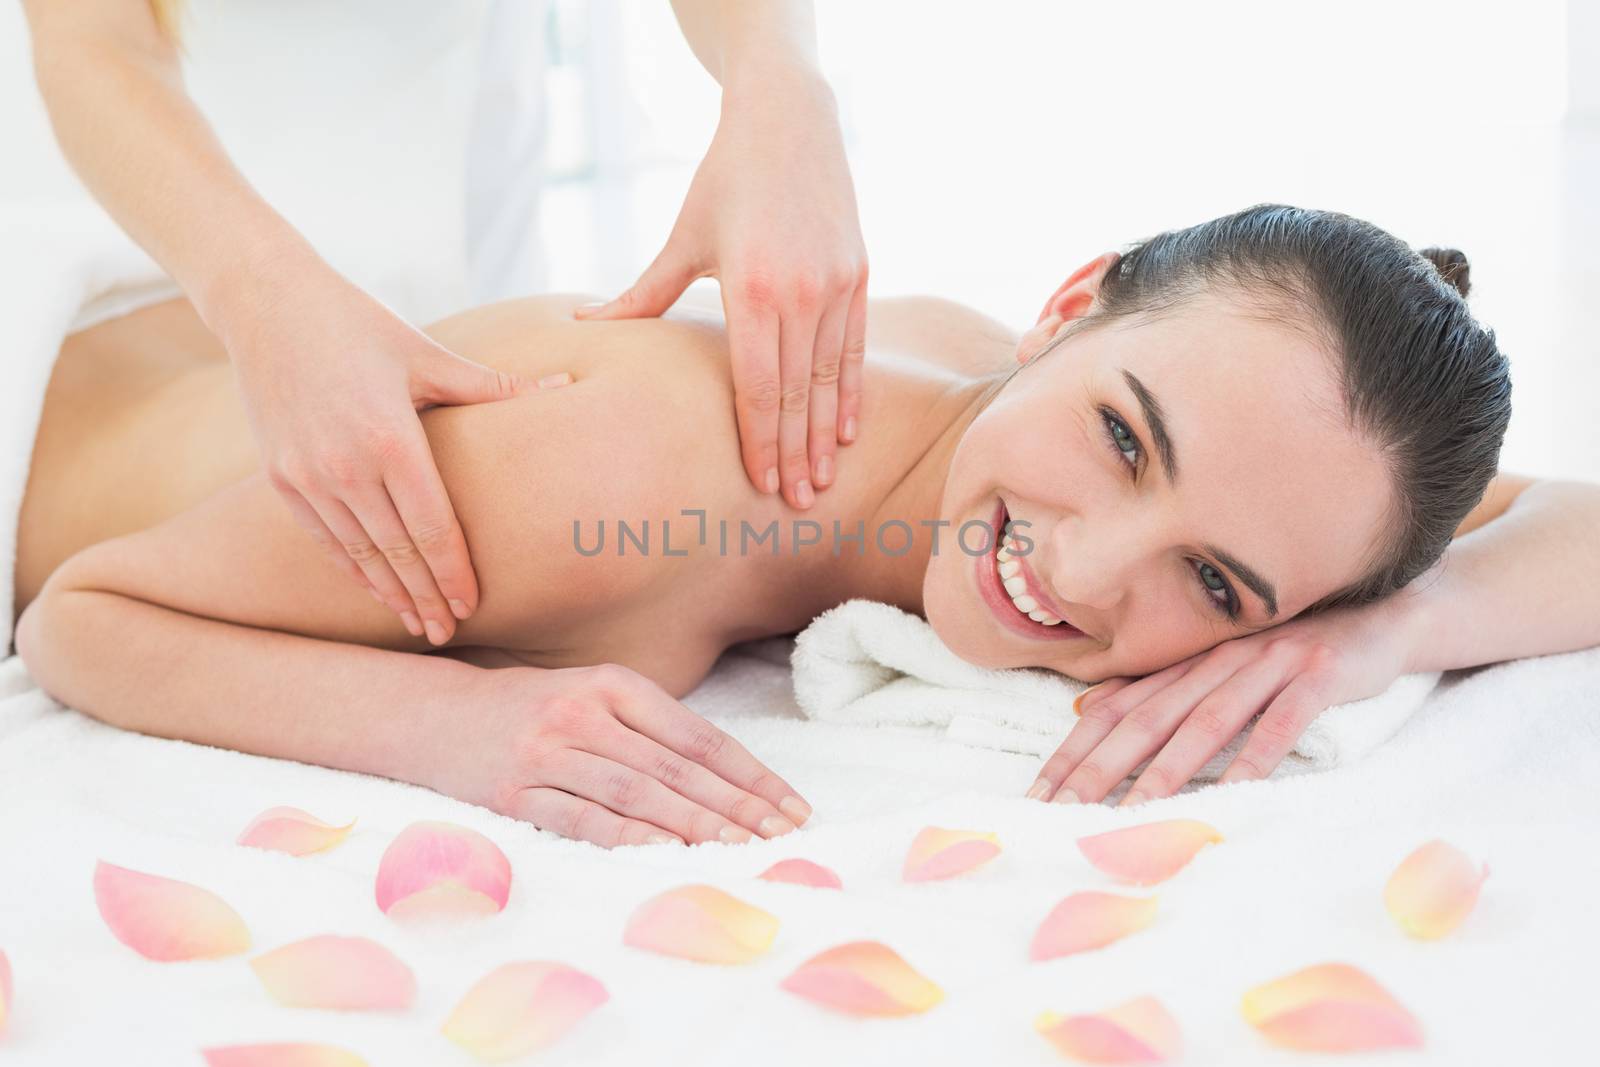 Woman enjoying shoulder massage at beauty spa by Wavebreakmedia